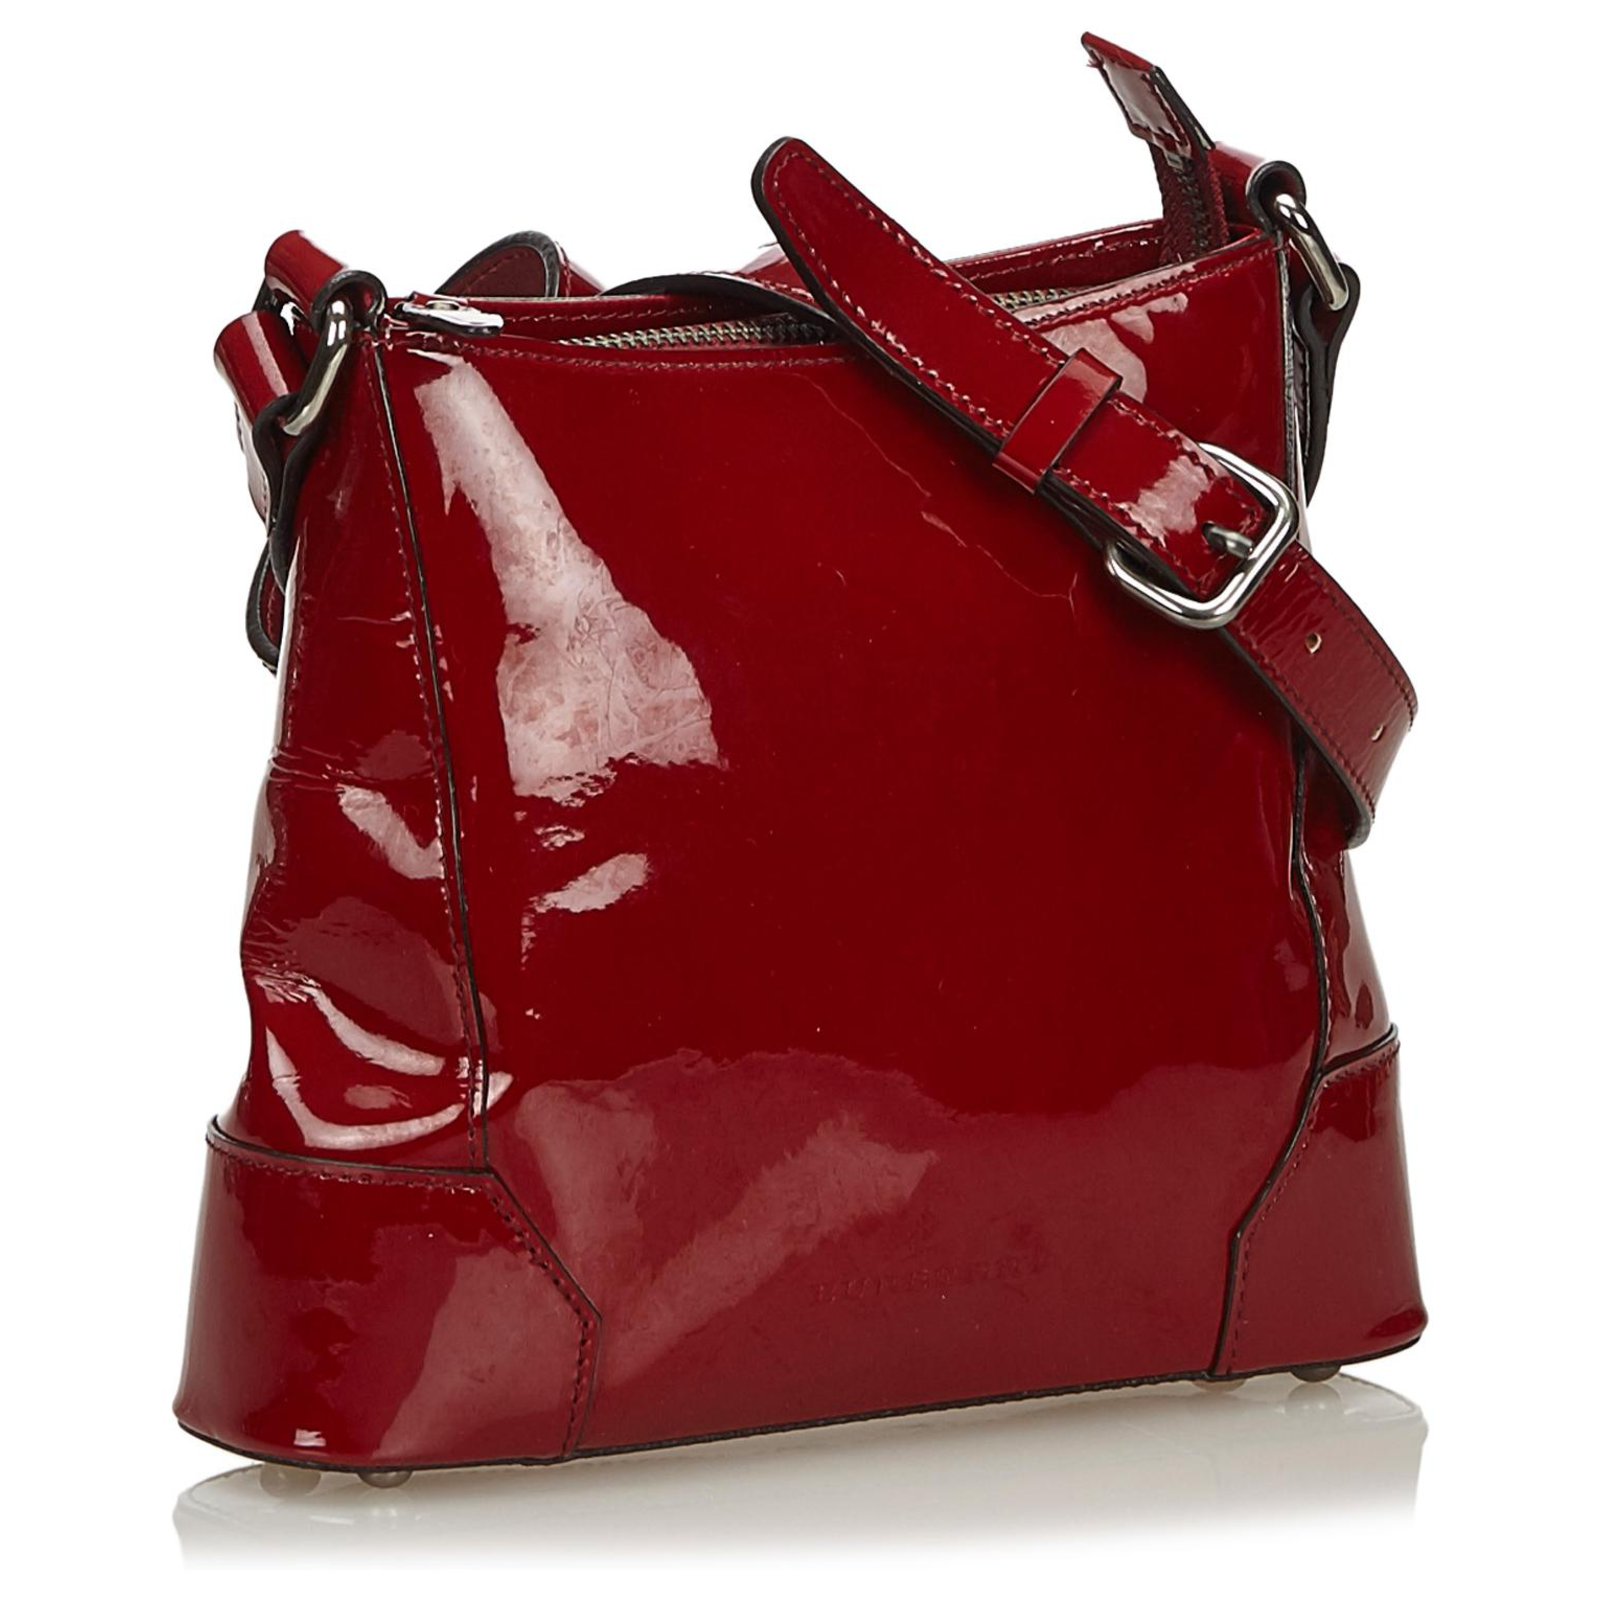 burberry red patent handbag